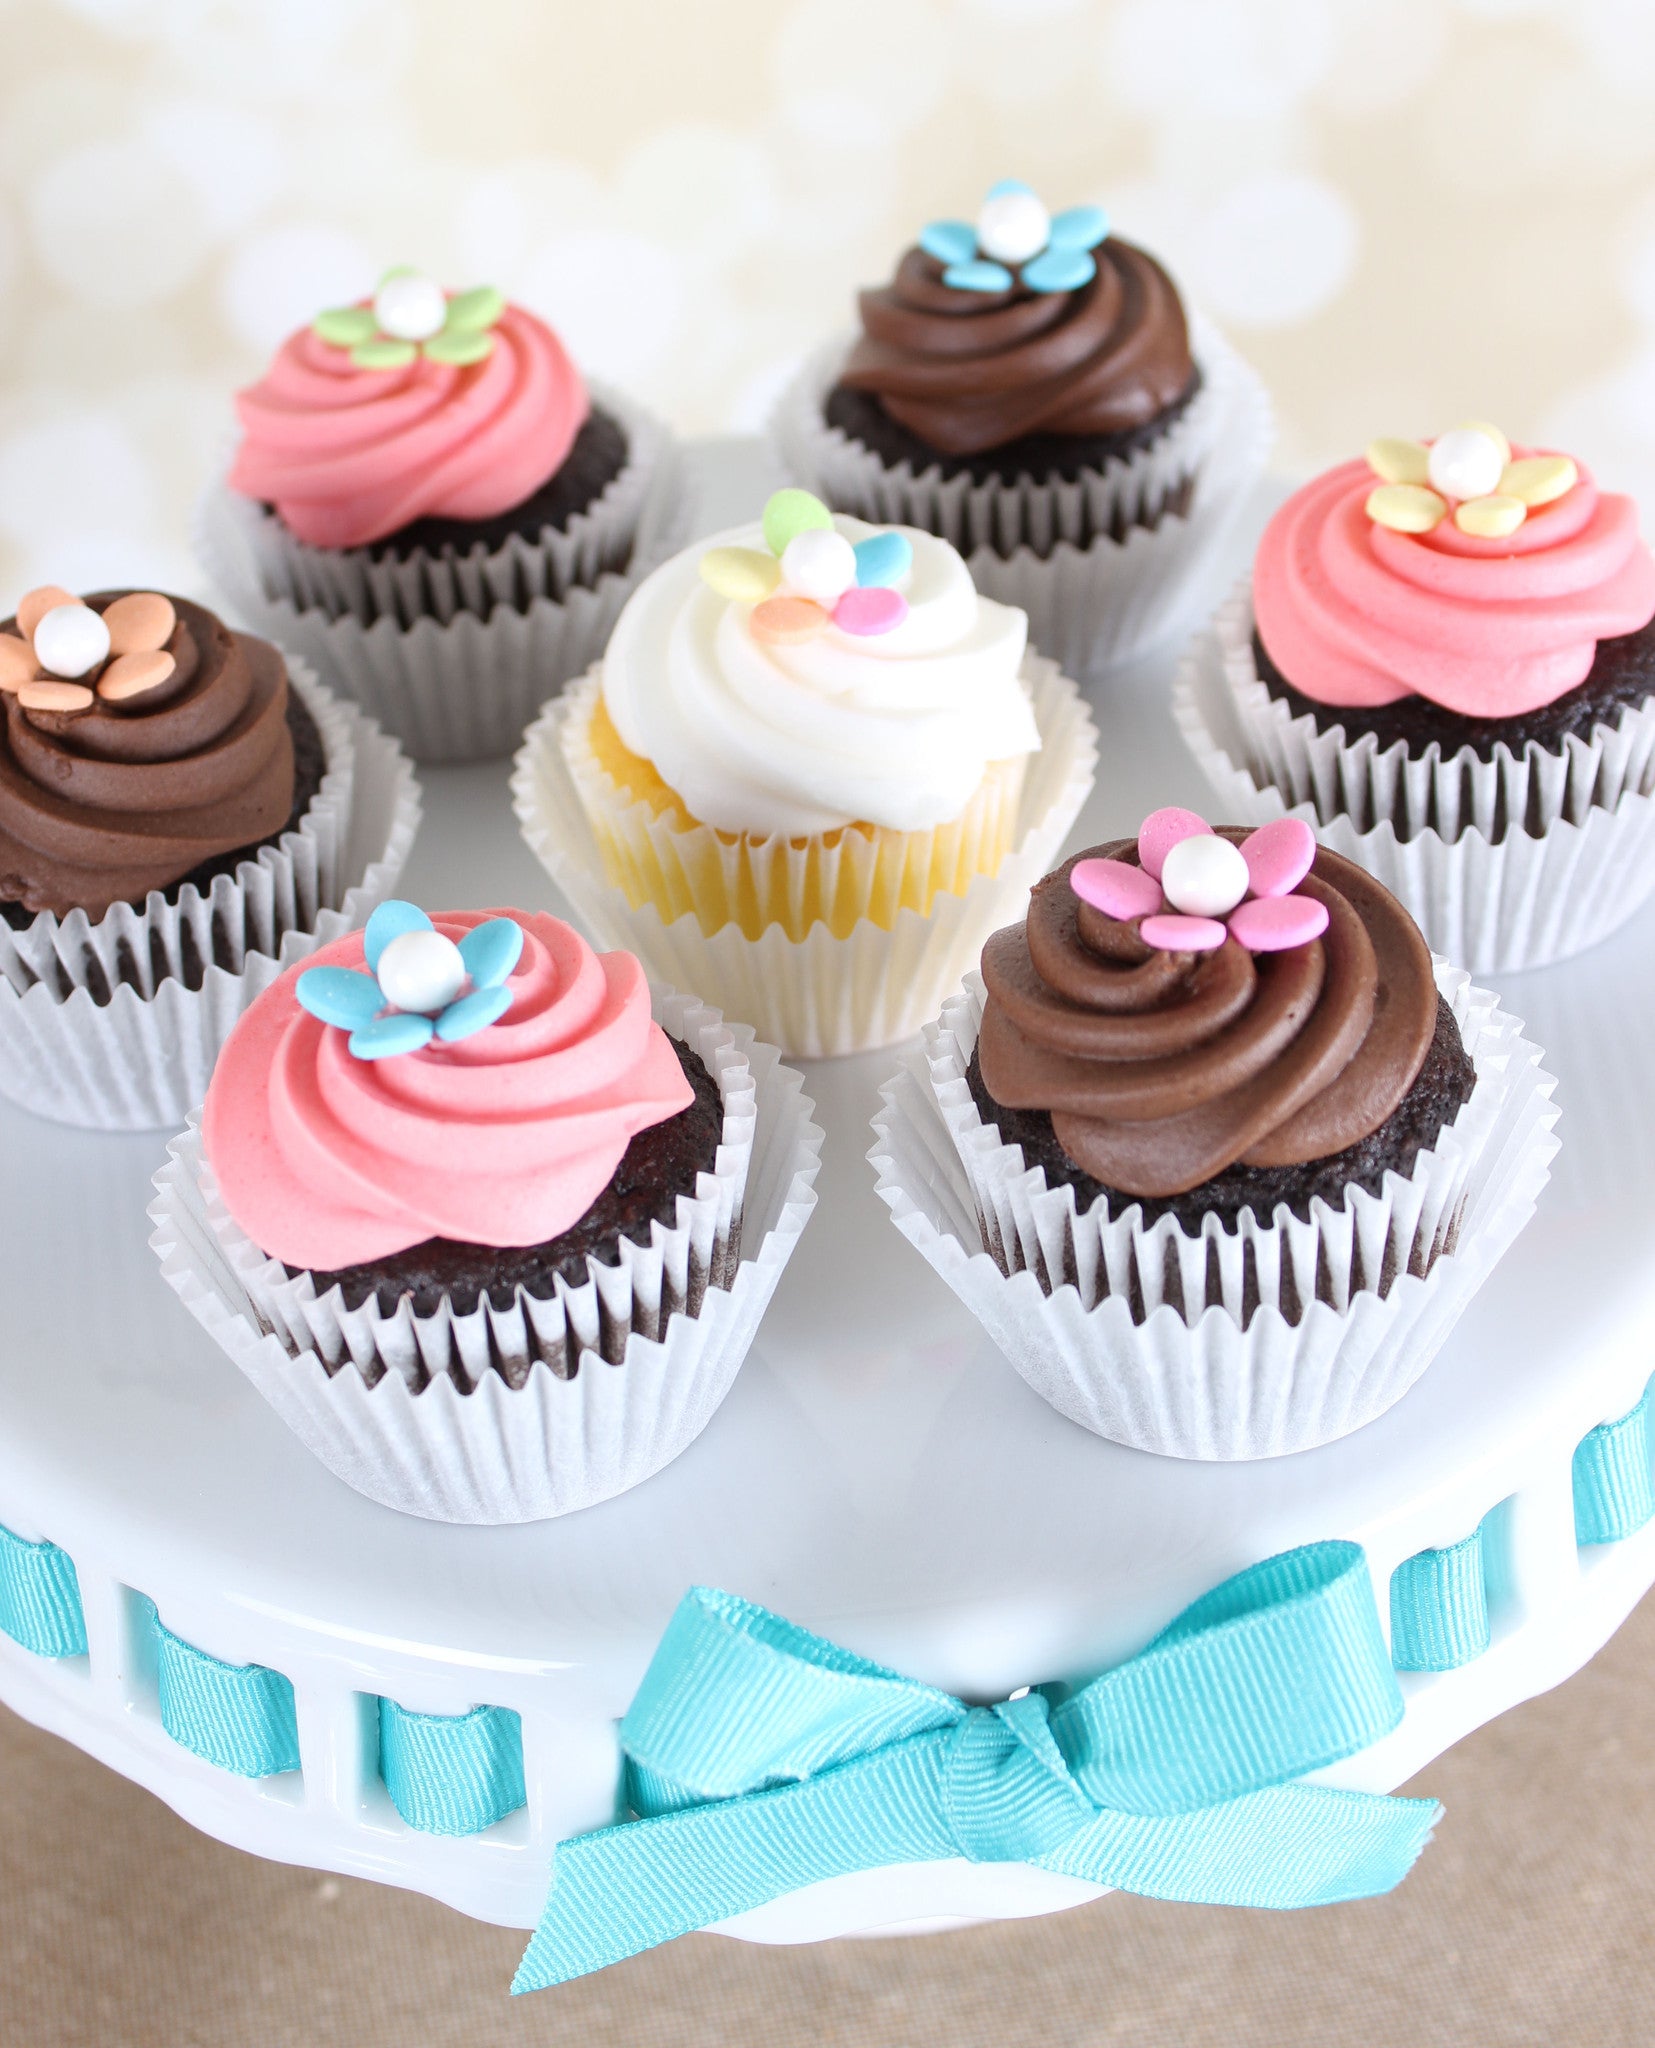 Bulk Midi White Cupcake Liners | www.sprinklebeesweet.com